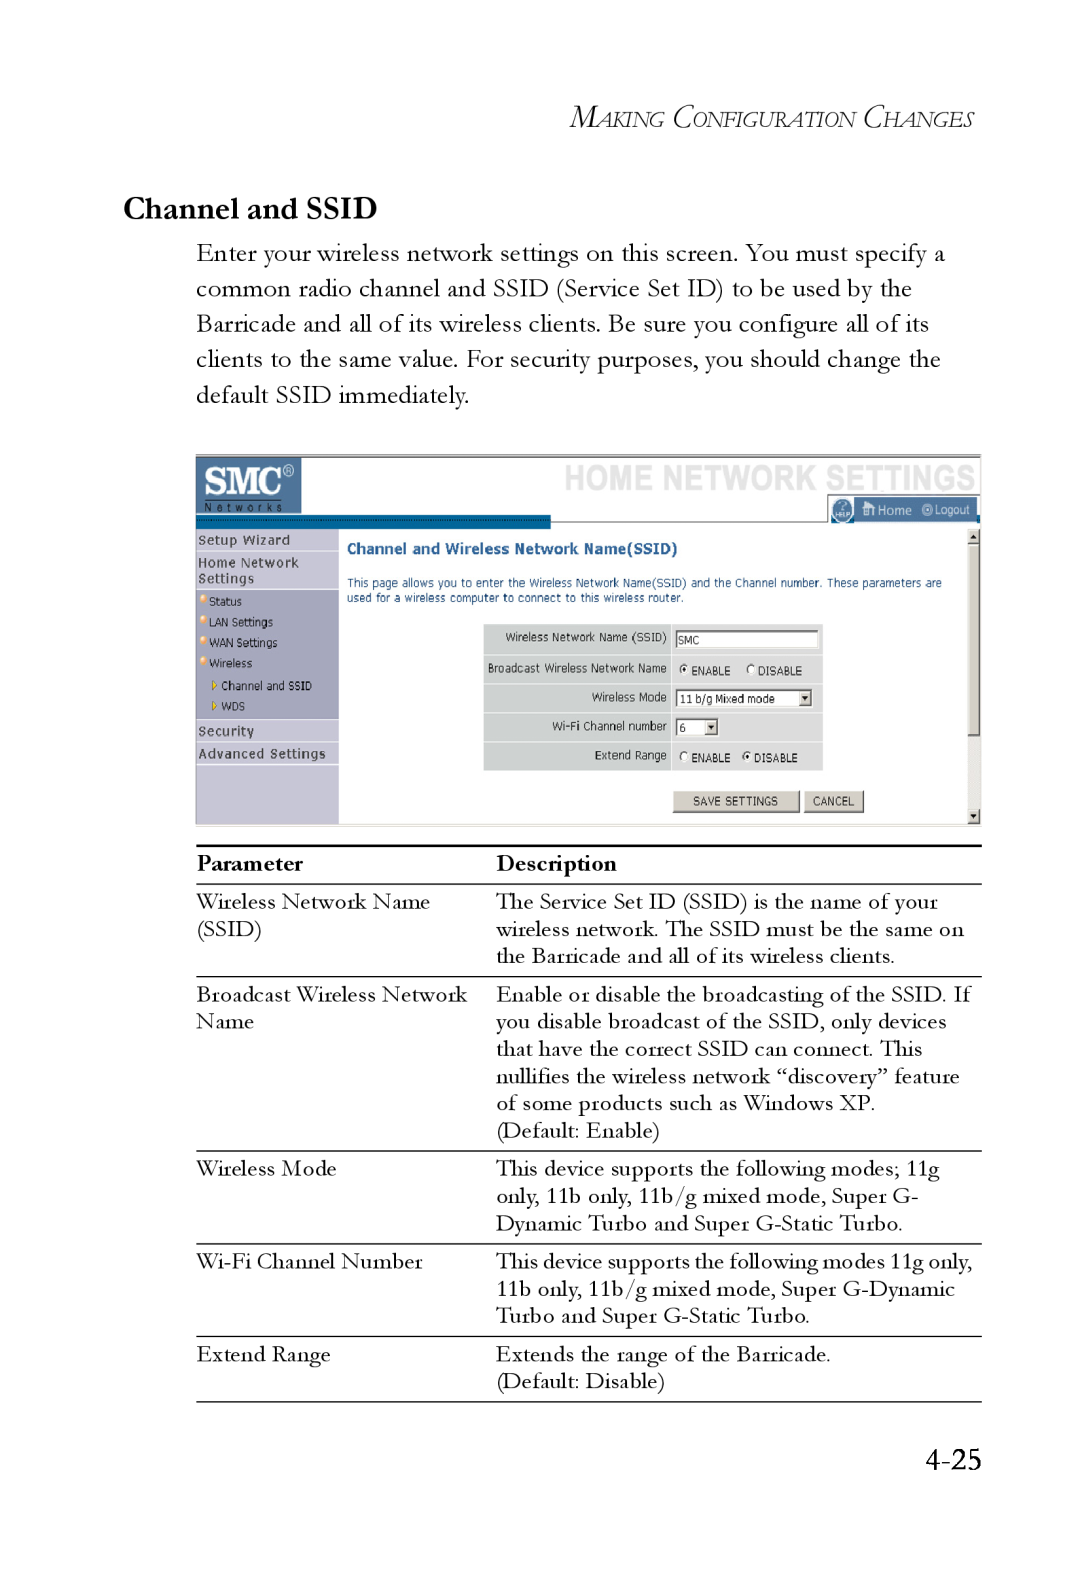 SMC Networks SMCWBR14T-G manual 4-25, Channel and SSID, Parameter, Description 